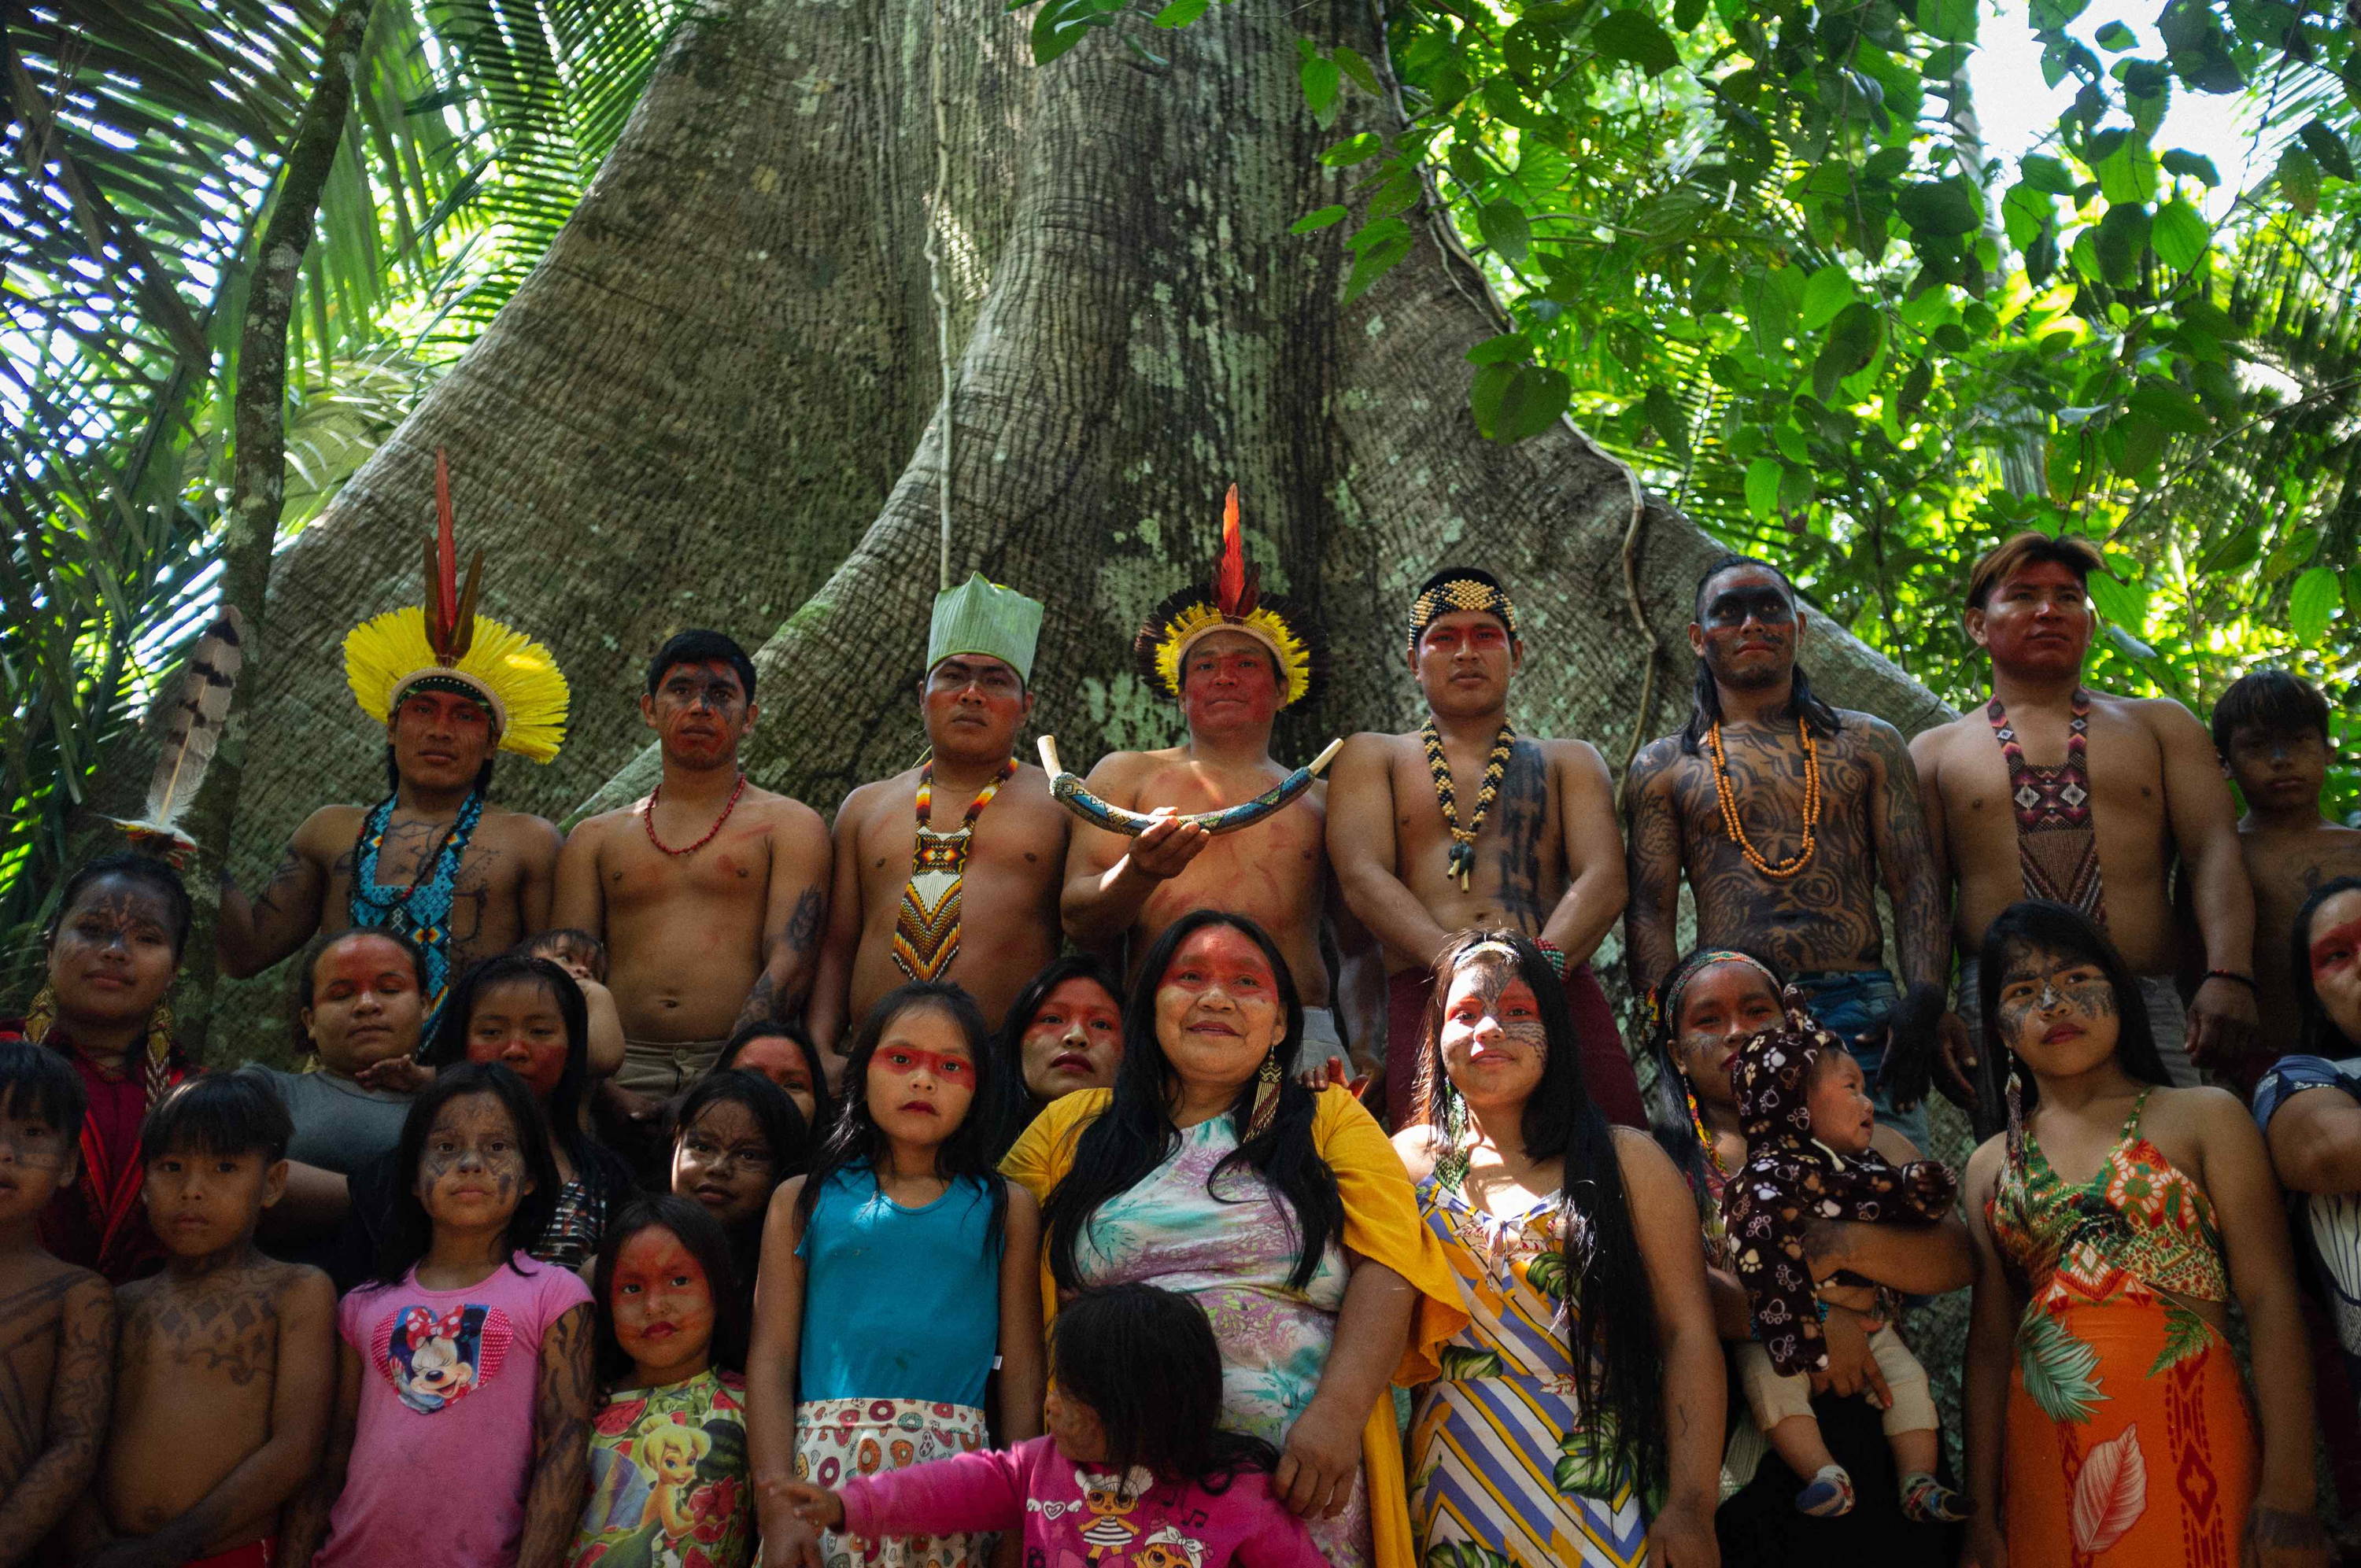 The Yawanawá community